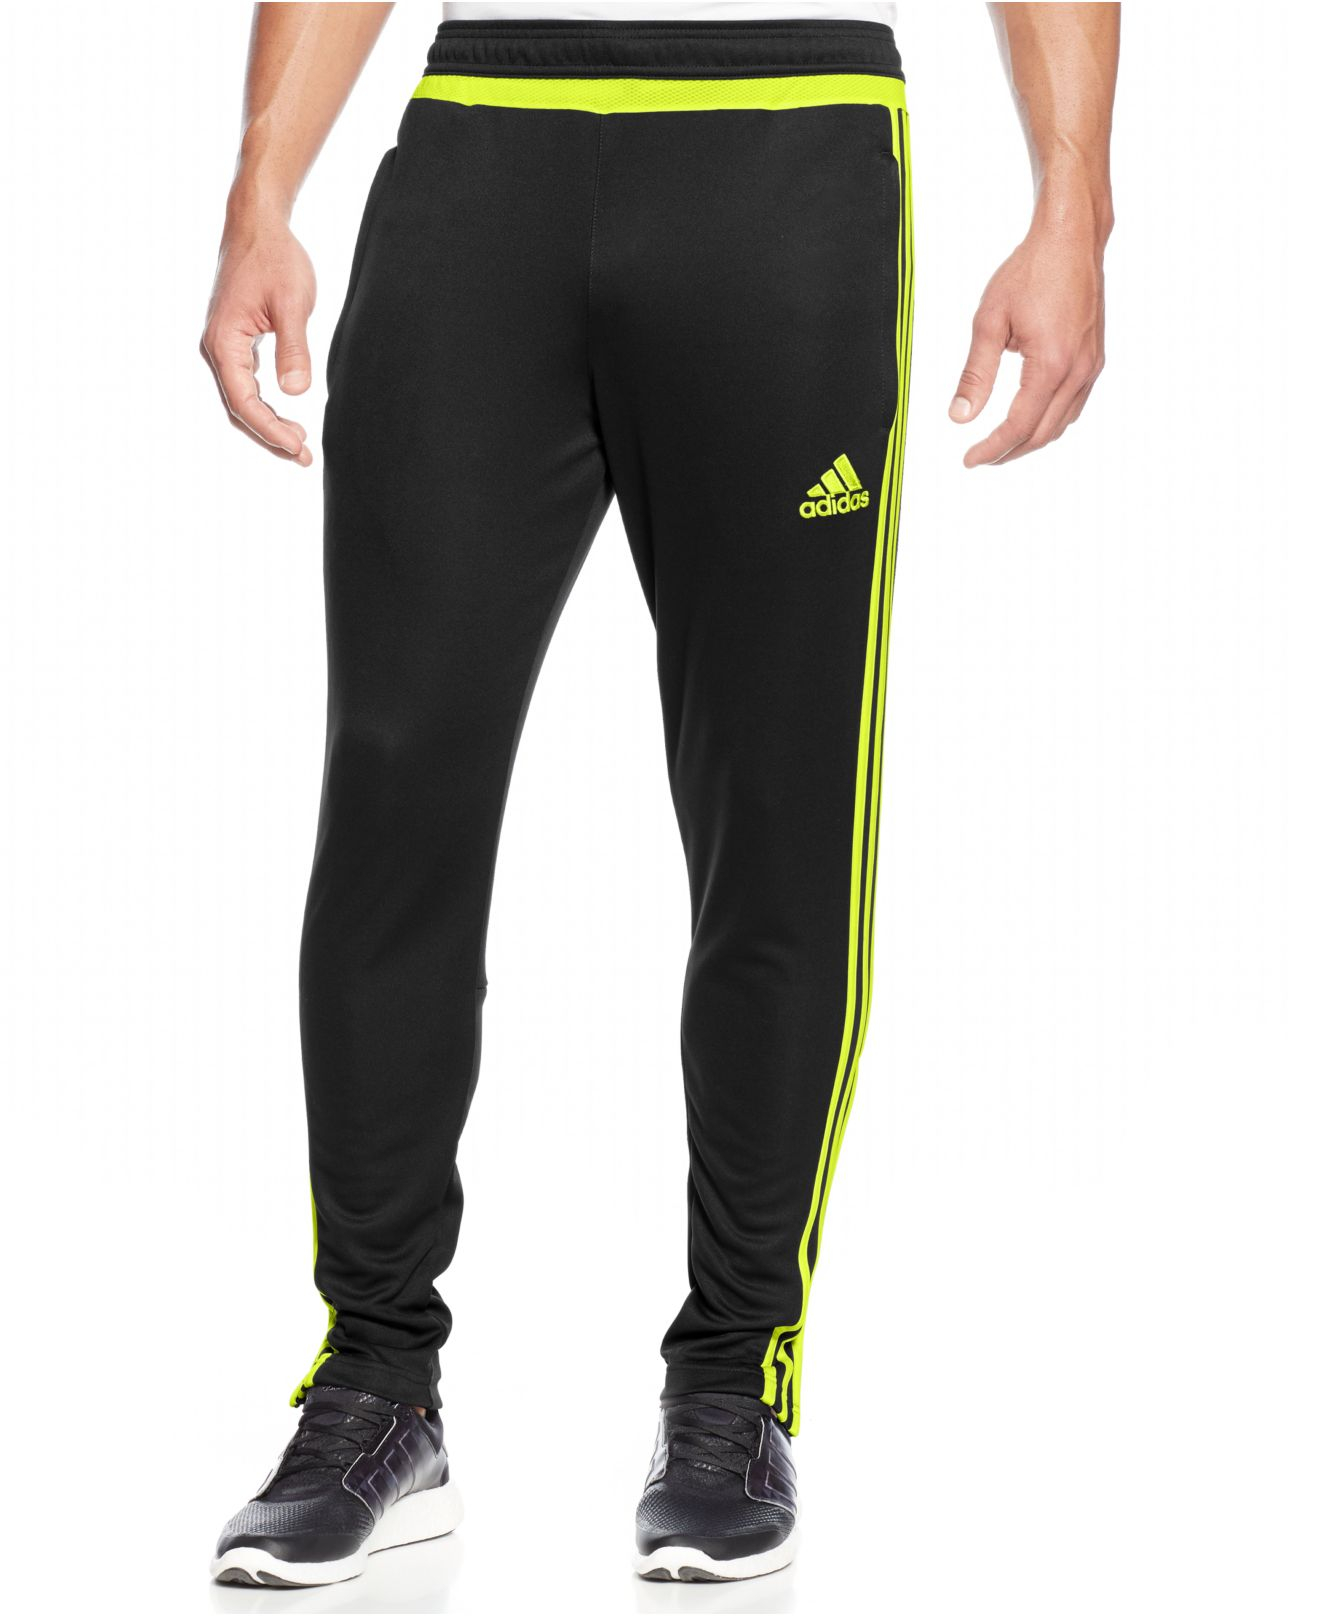 Adidas Tiro 15 Climacool® Training Pants in Yellow for Men (Black/Semi